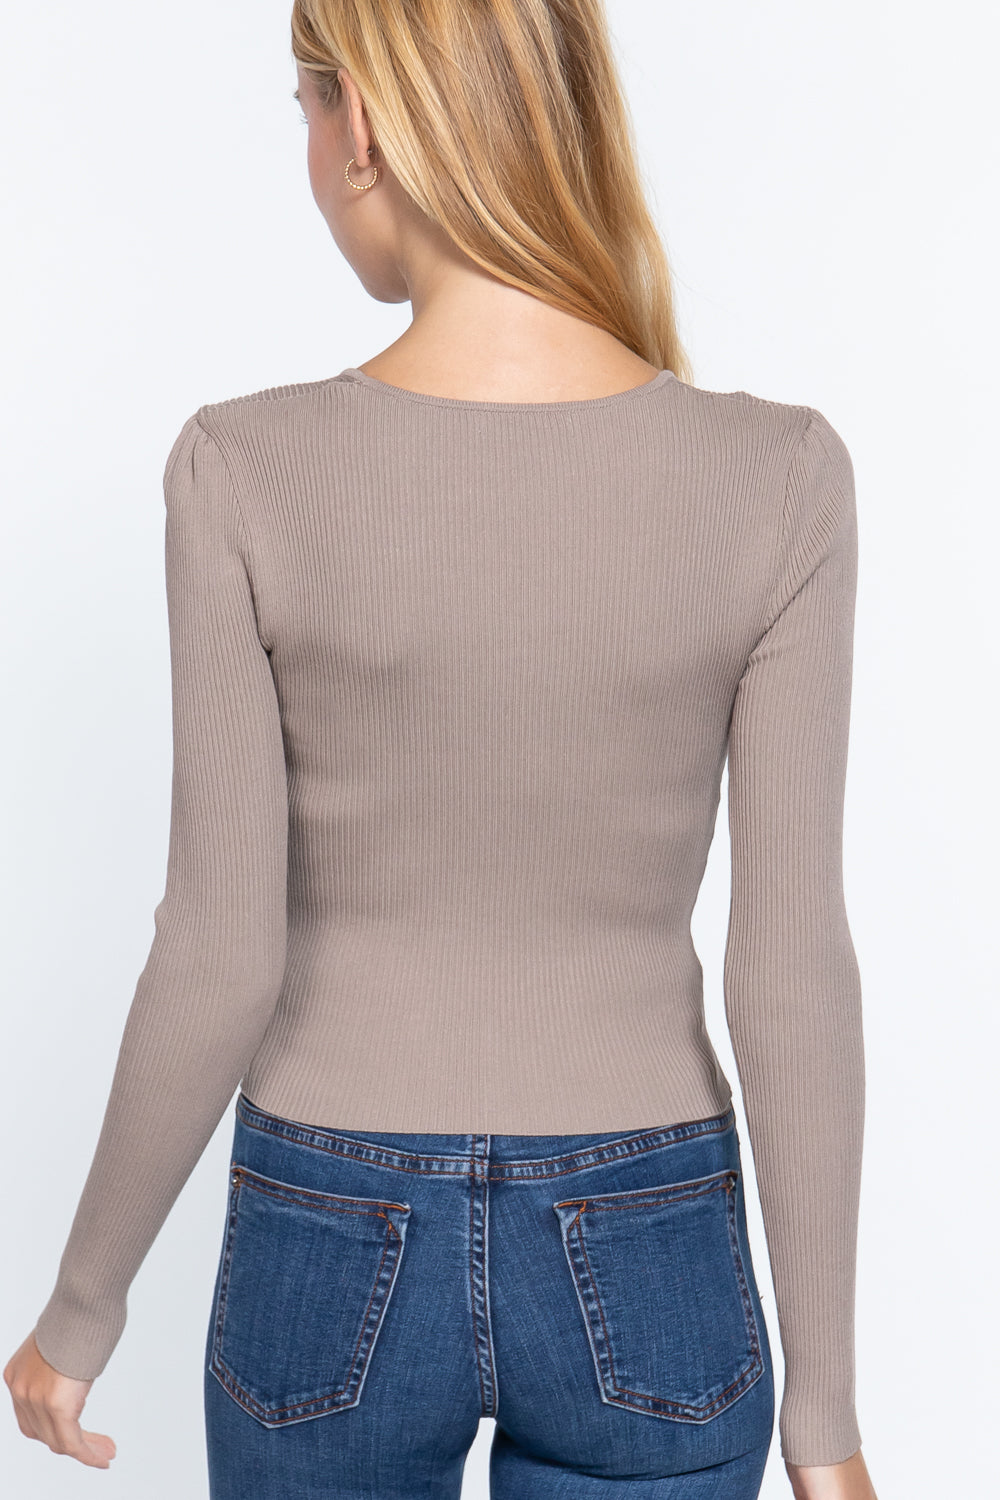 Grey Shirring Sweetheart Neck Long Sleeve Elegant Slim Fit Sweater Top Shirts & Tops jehouze 